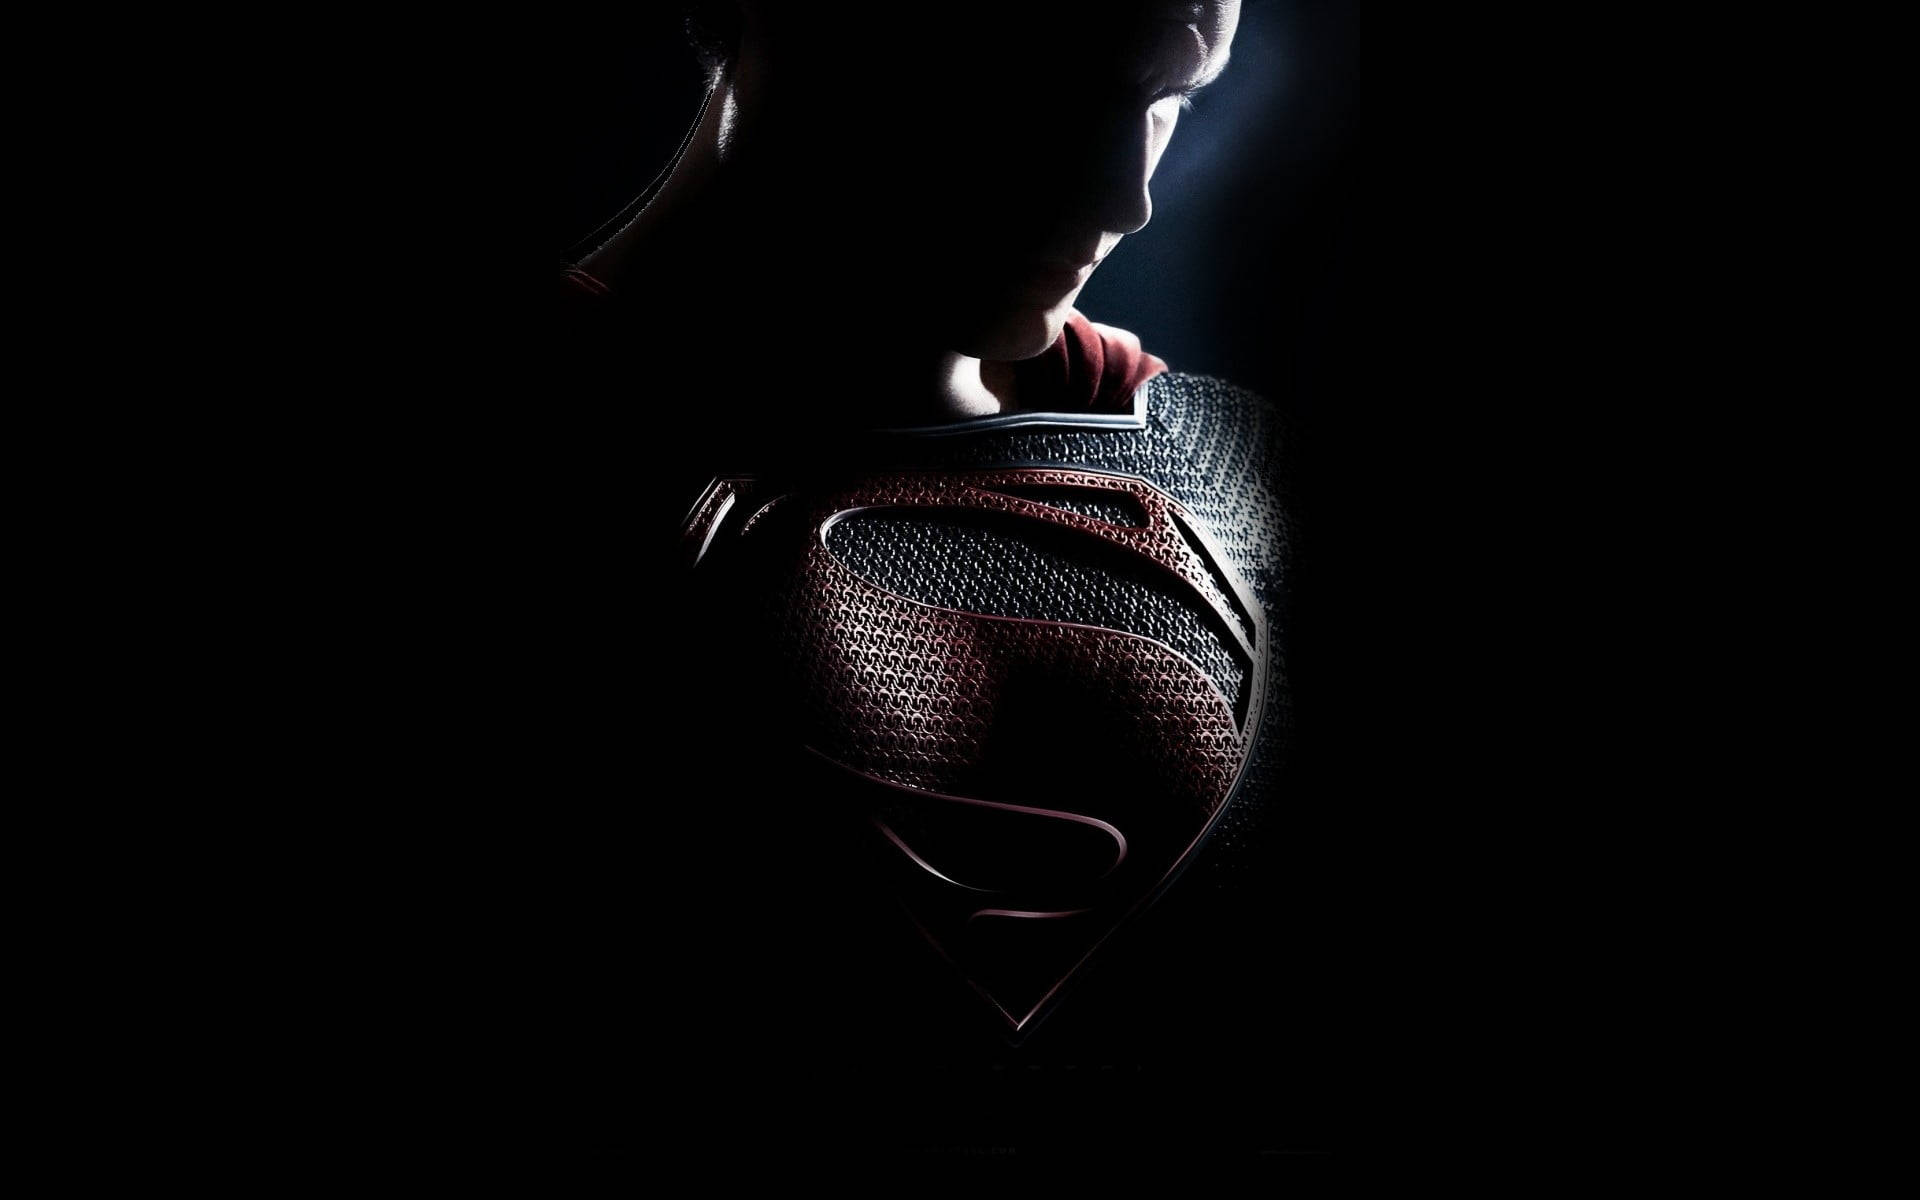 Superman Logo On Superman’s Suit Wallpaper